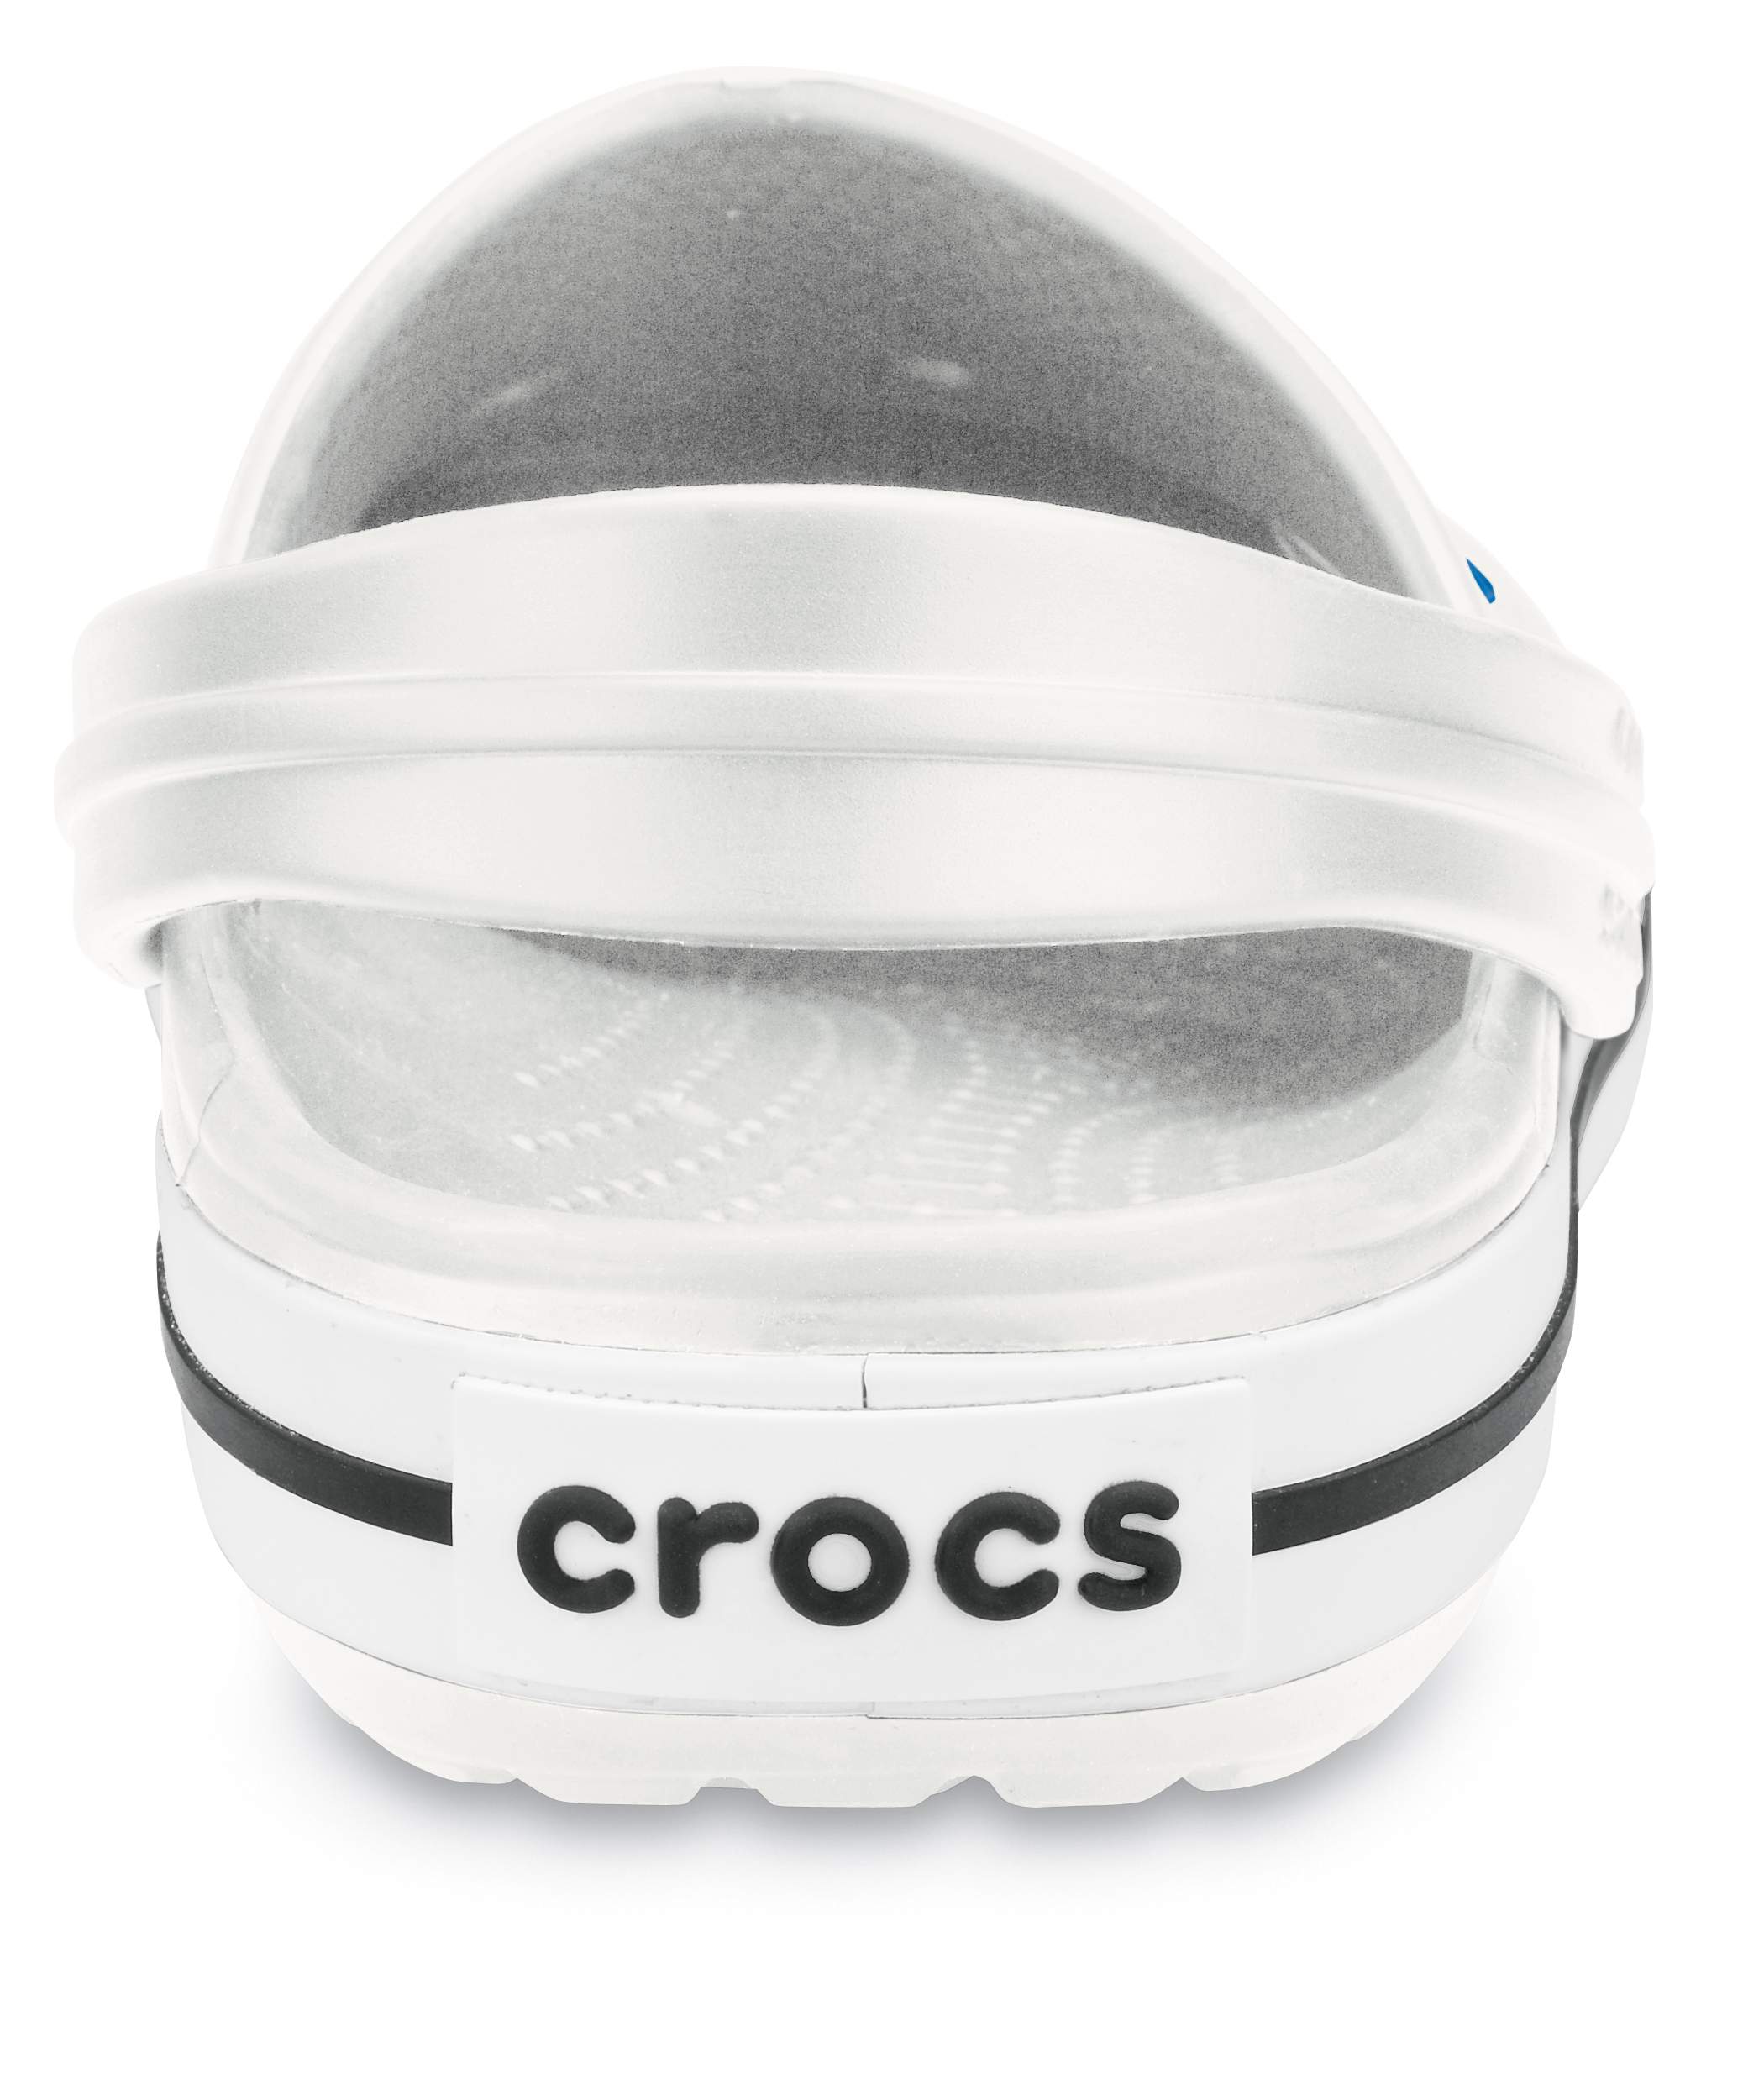 crocs navy white